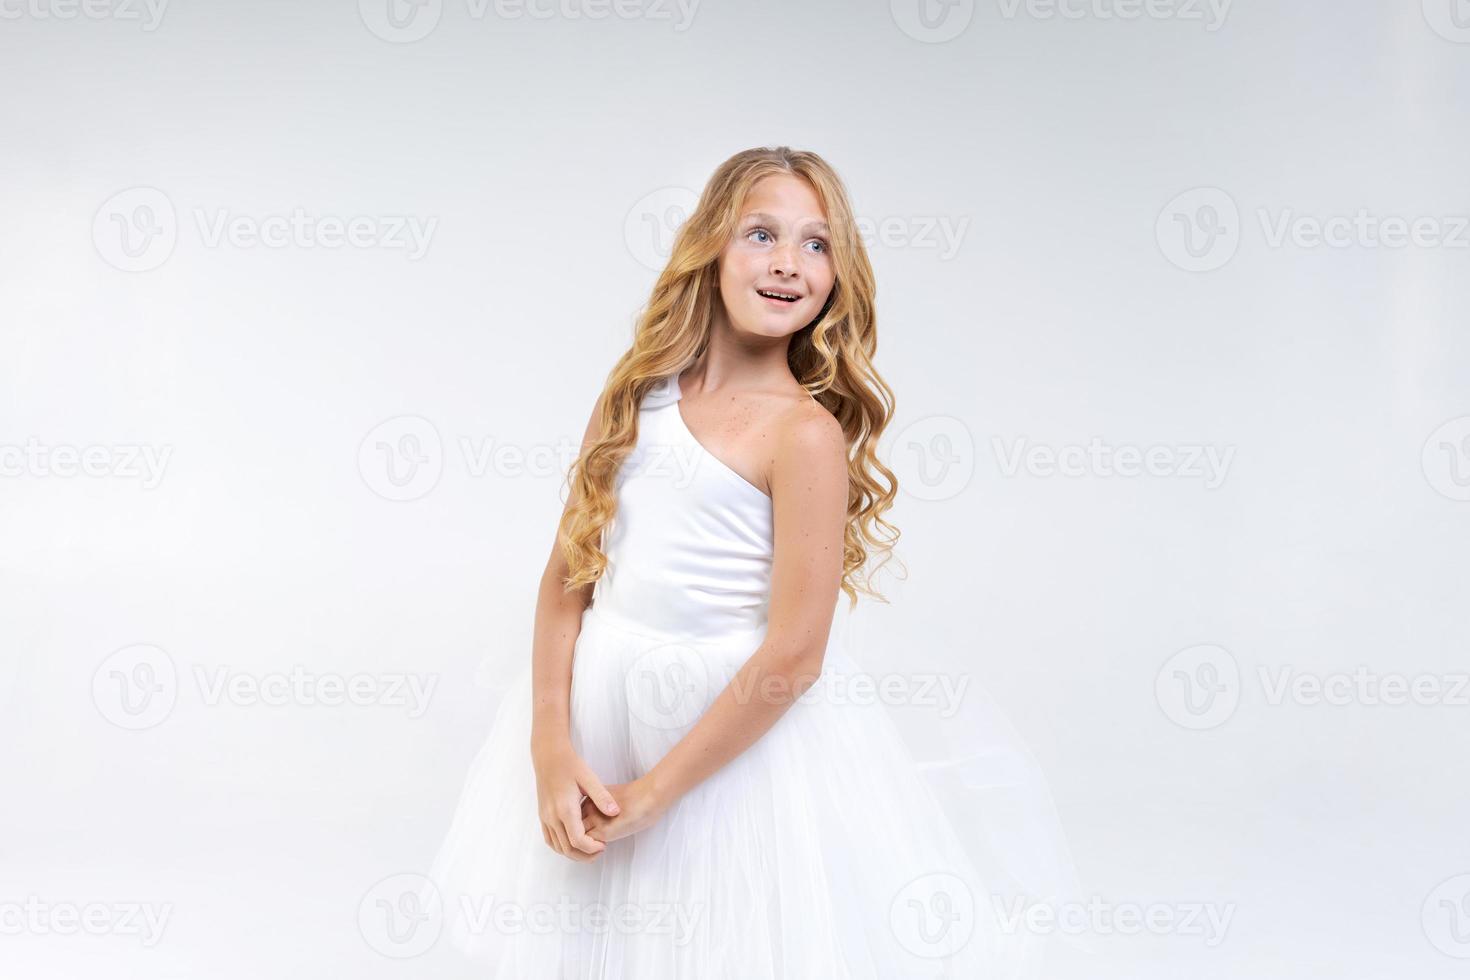 linda linda garota de vestido branco com longos cabelos ondulados posando no estúdio foto